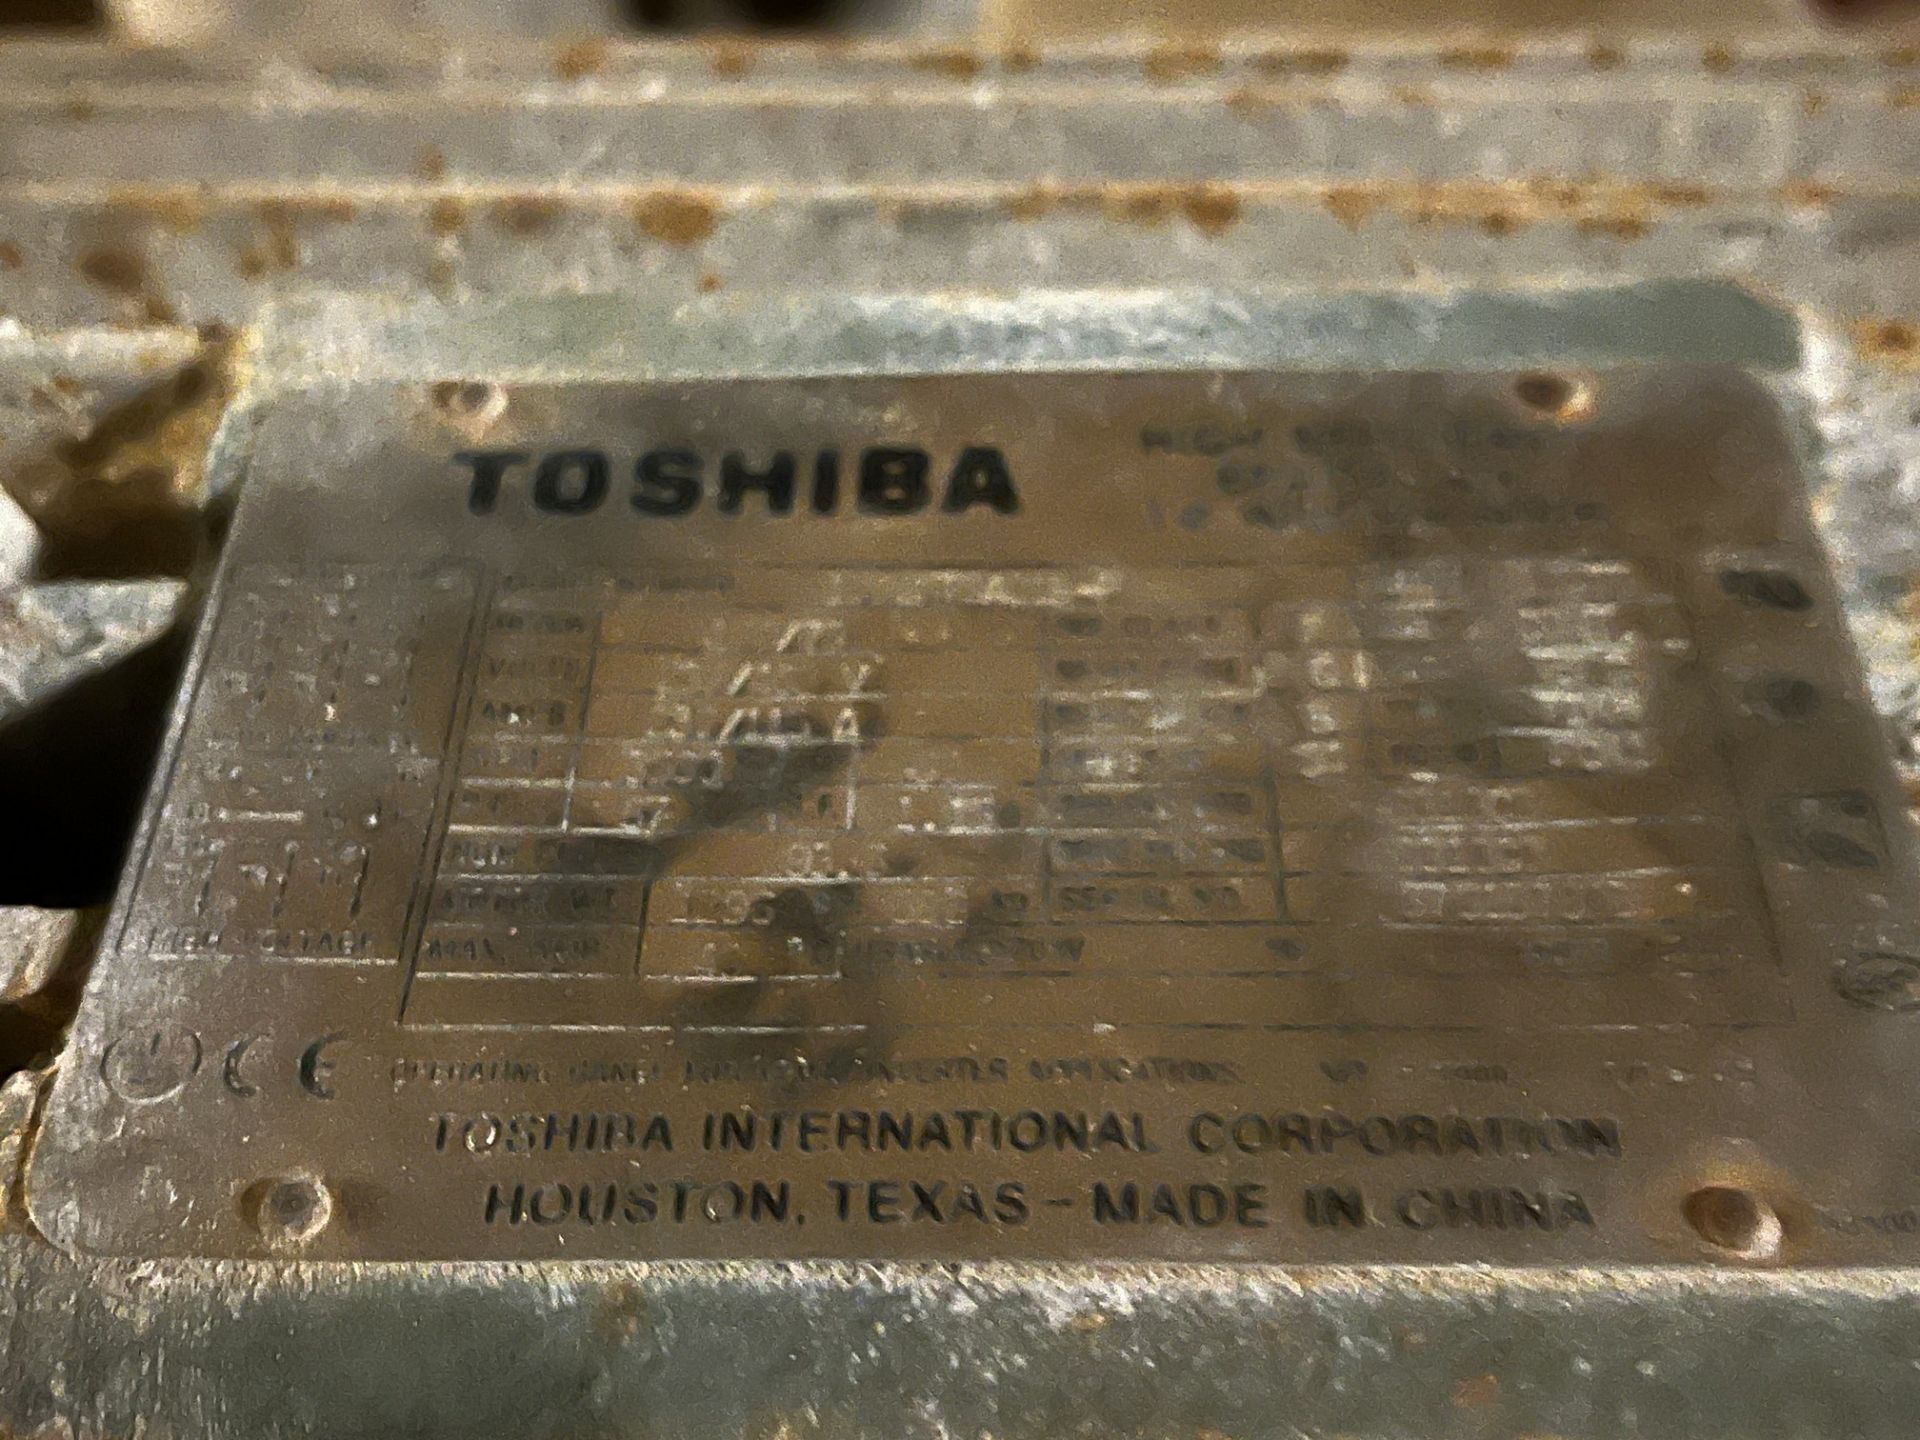 TOSHIBA 100HP MOTOR, 3,500 RPM, 230/460V, N/A FRAME (DEINKING BUILDING, 1ST FLOOR) - Image 2 of 2